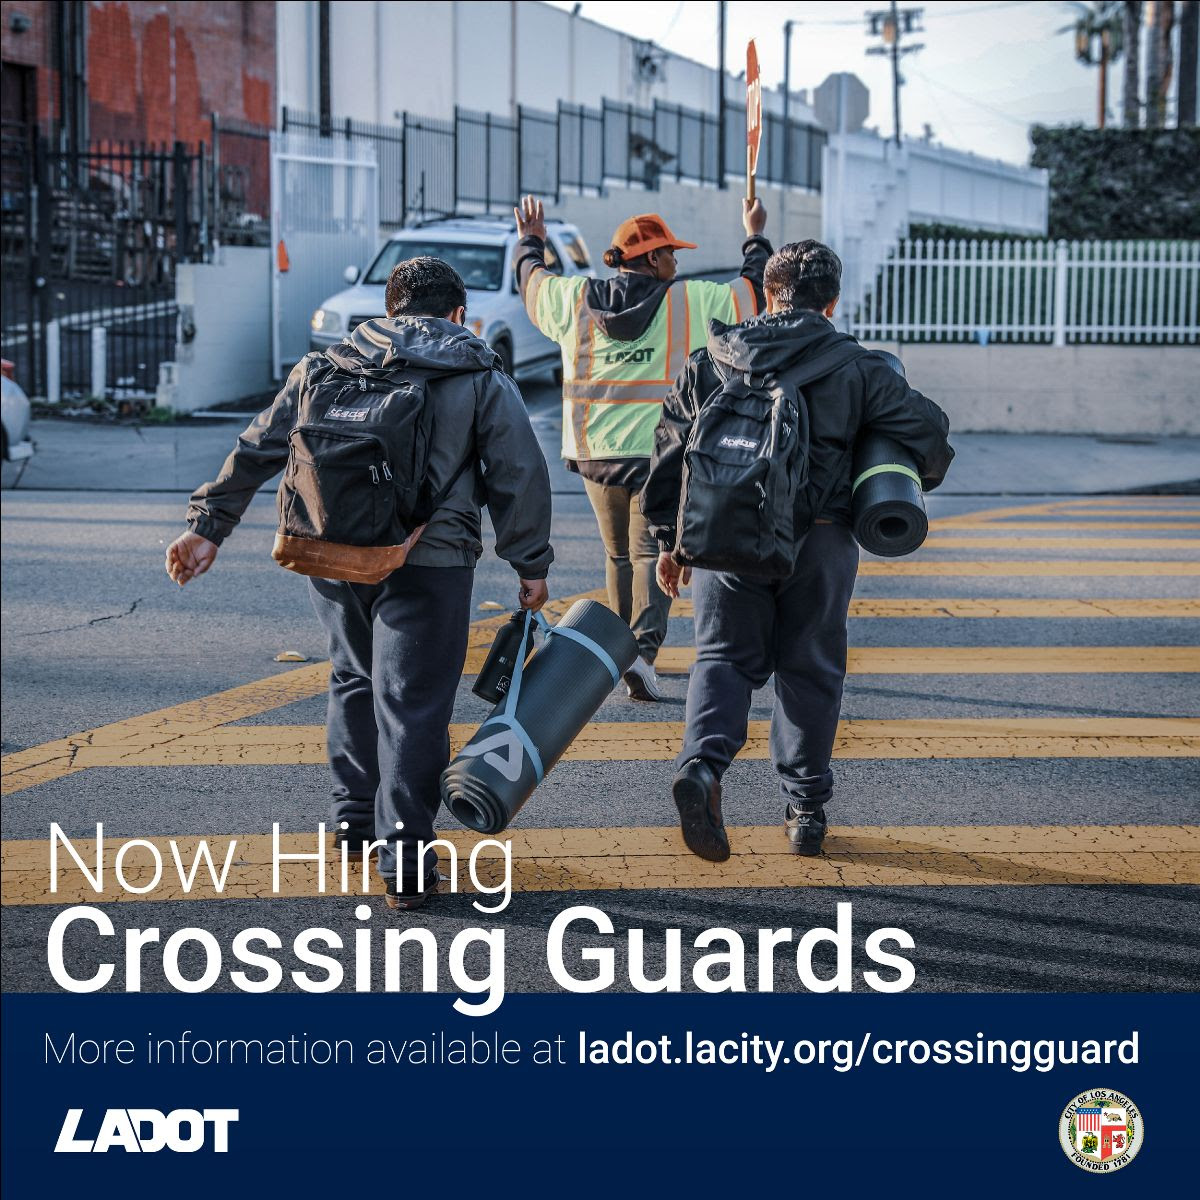 LADOT Hiring Crossing Guards